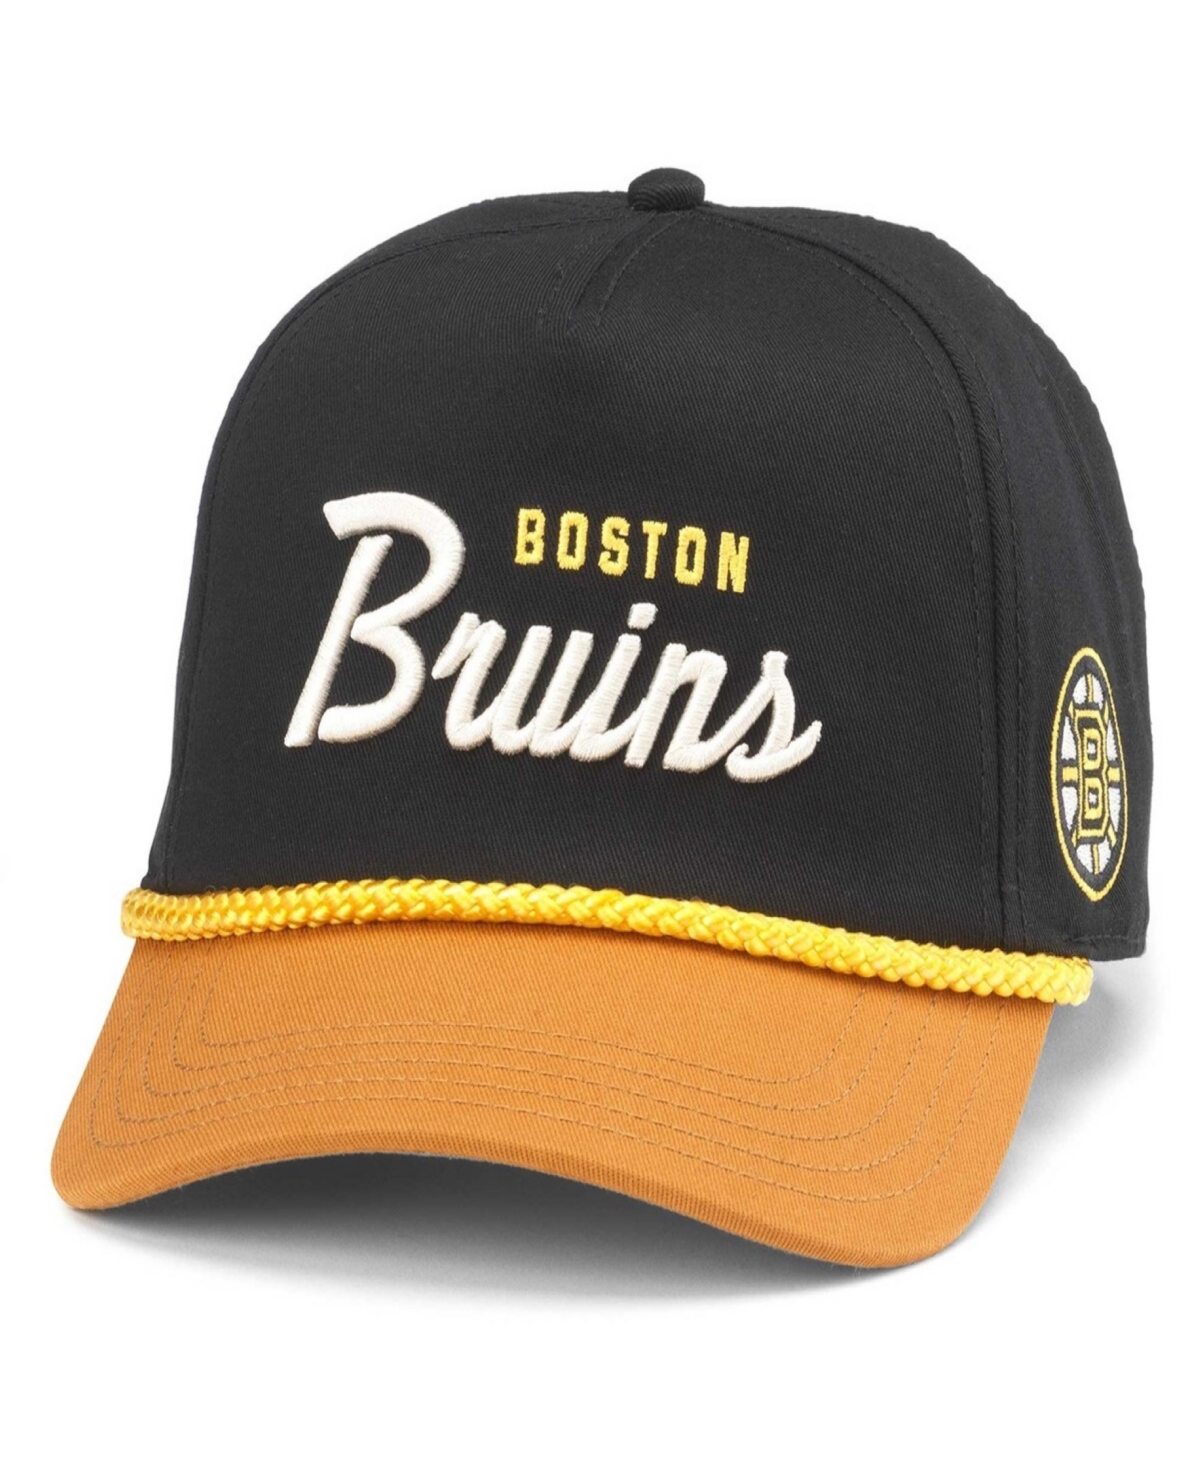 Men's Black/Gold Boston Bruins Roscoe Washed Twill Adjustable Hat - Black Gold